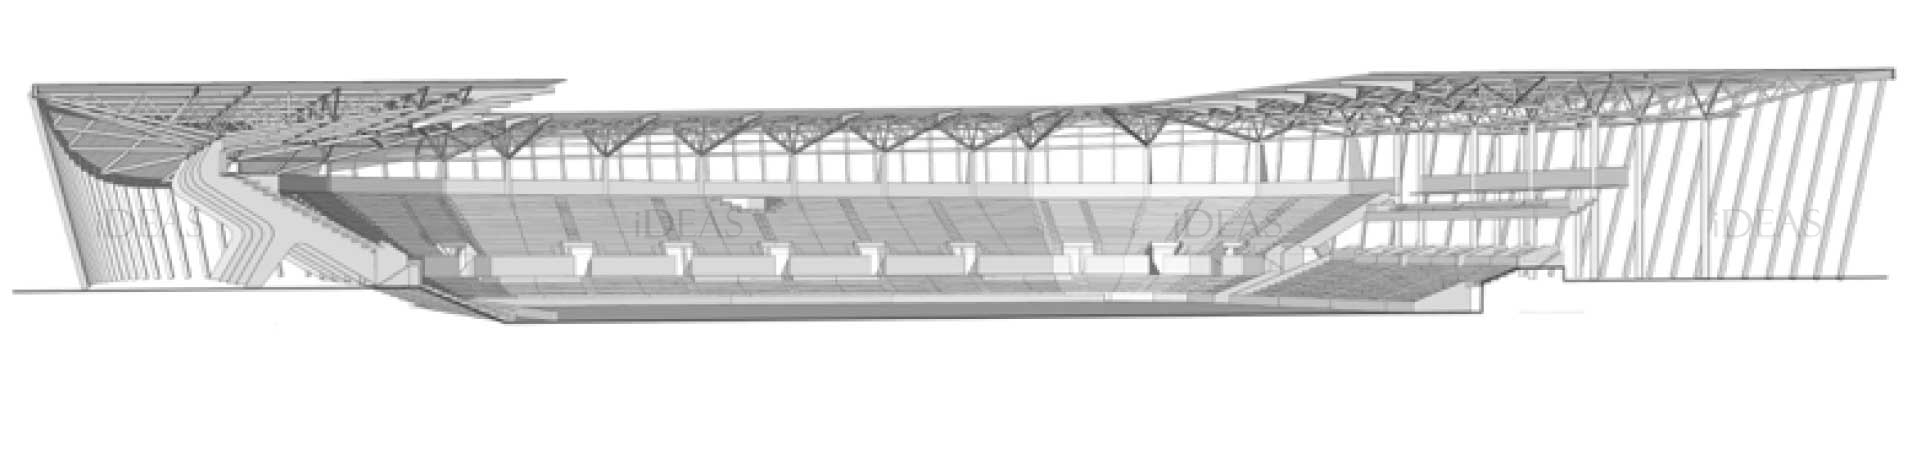 padova stadium section structural engineering